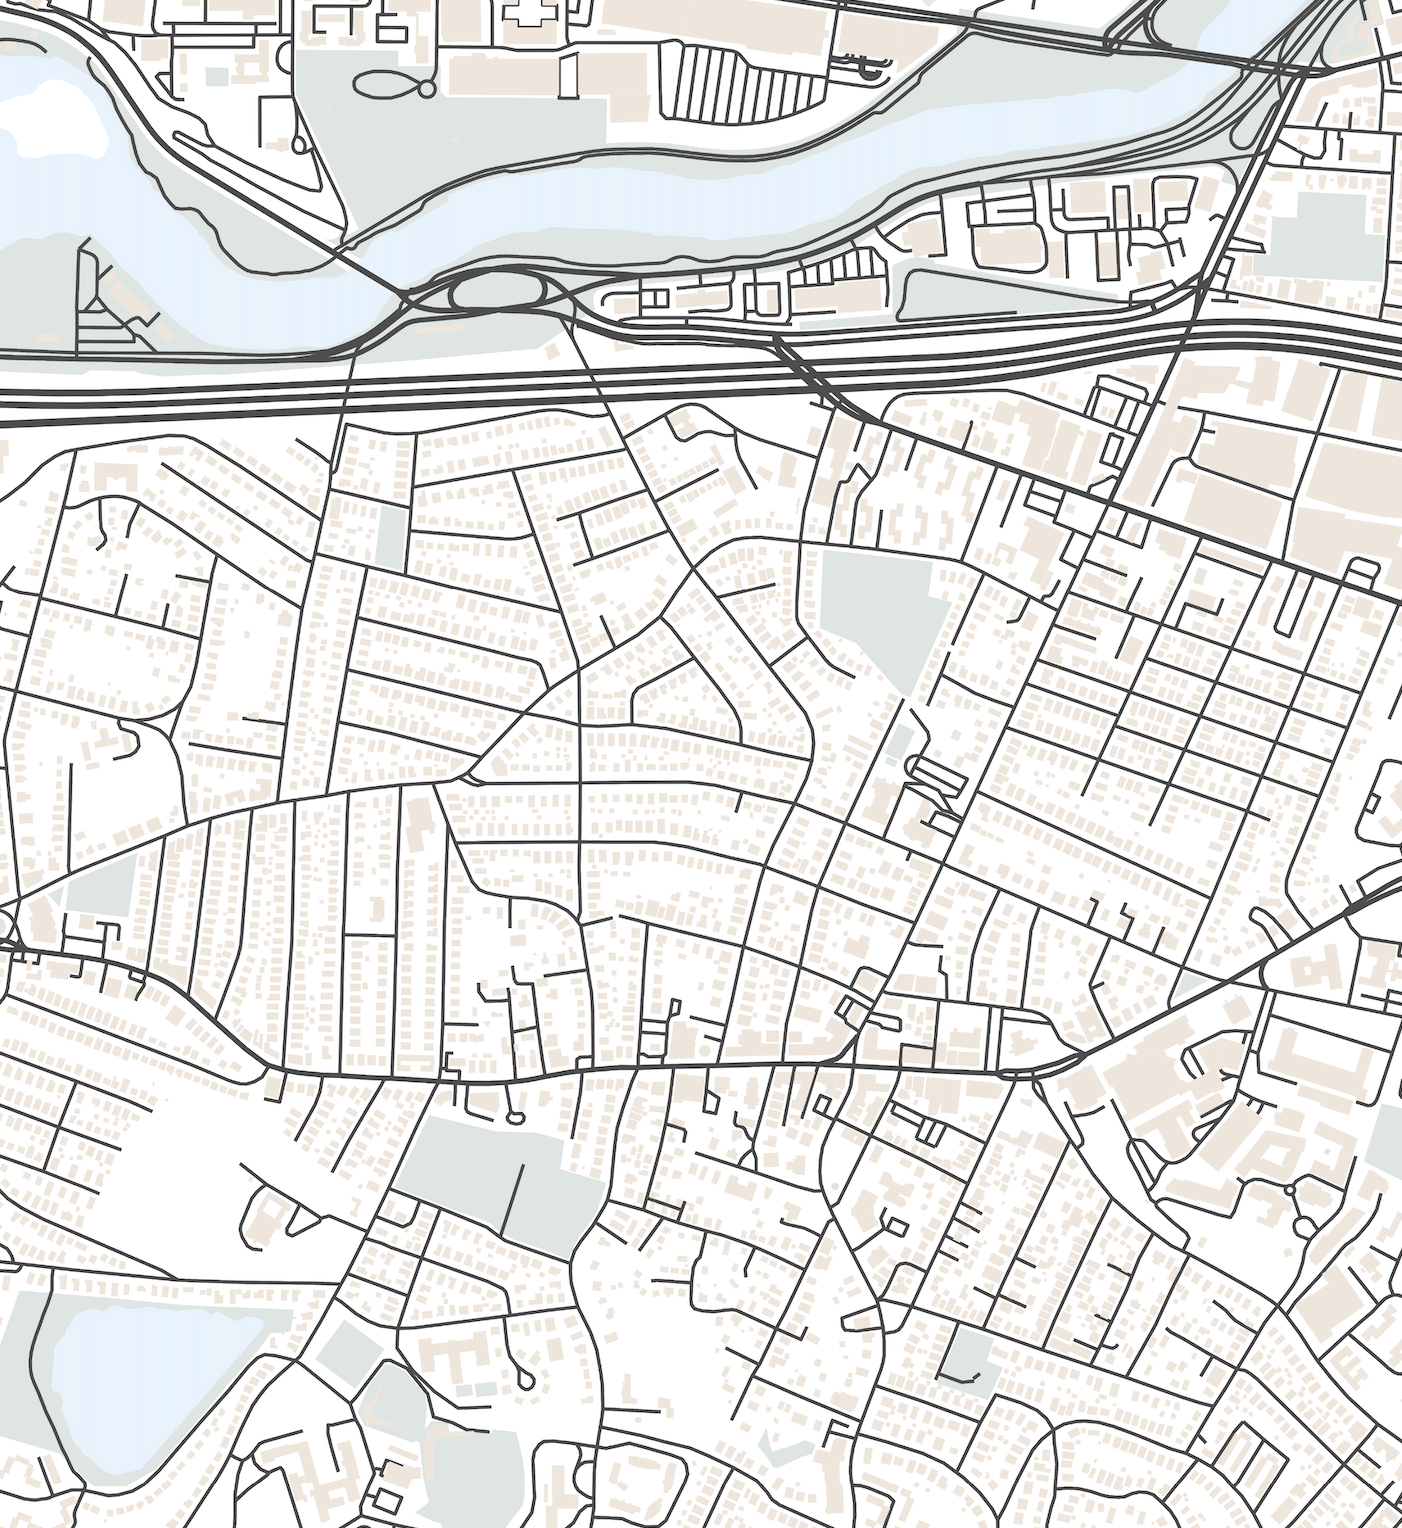 Brighton Map Print